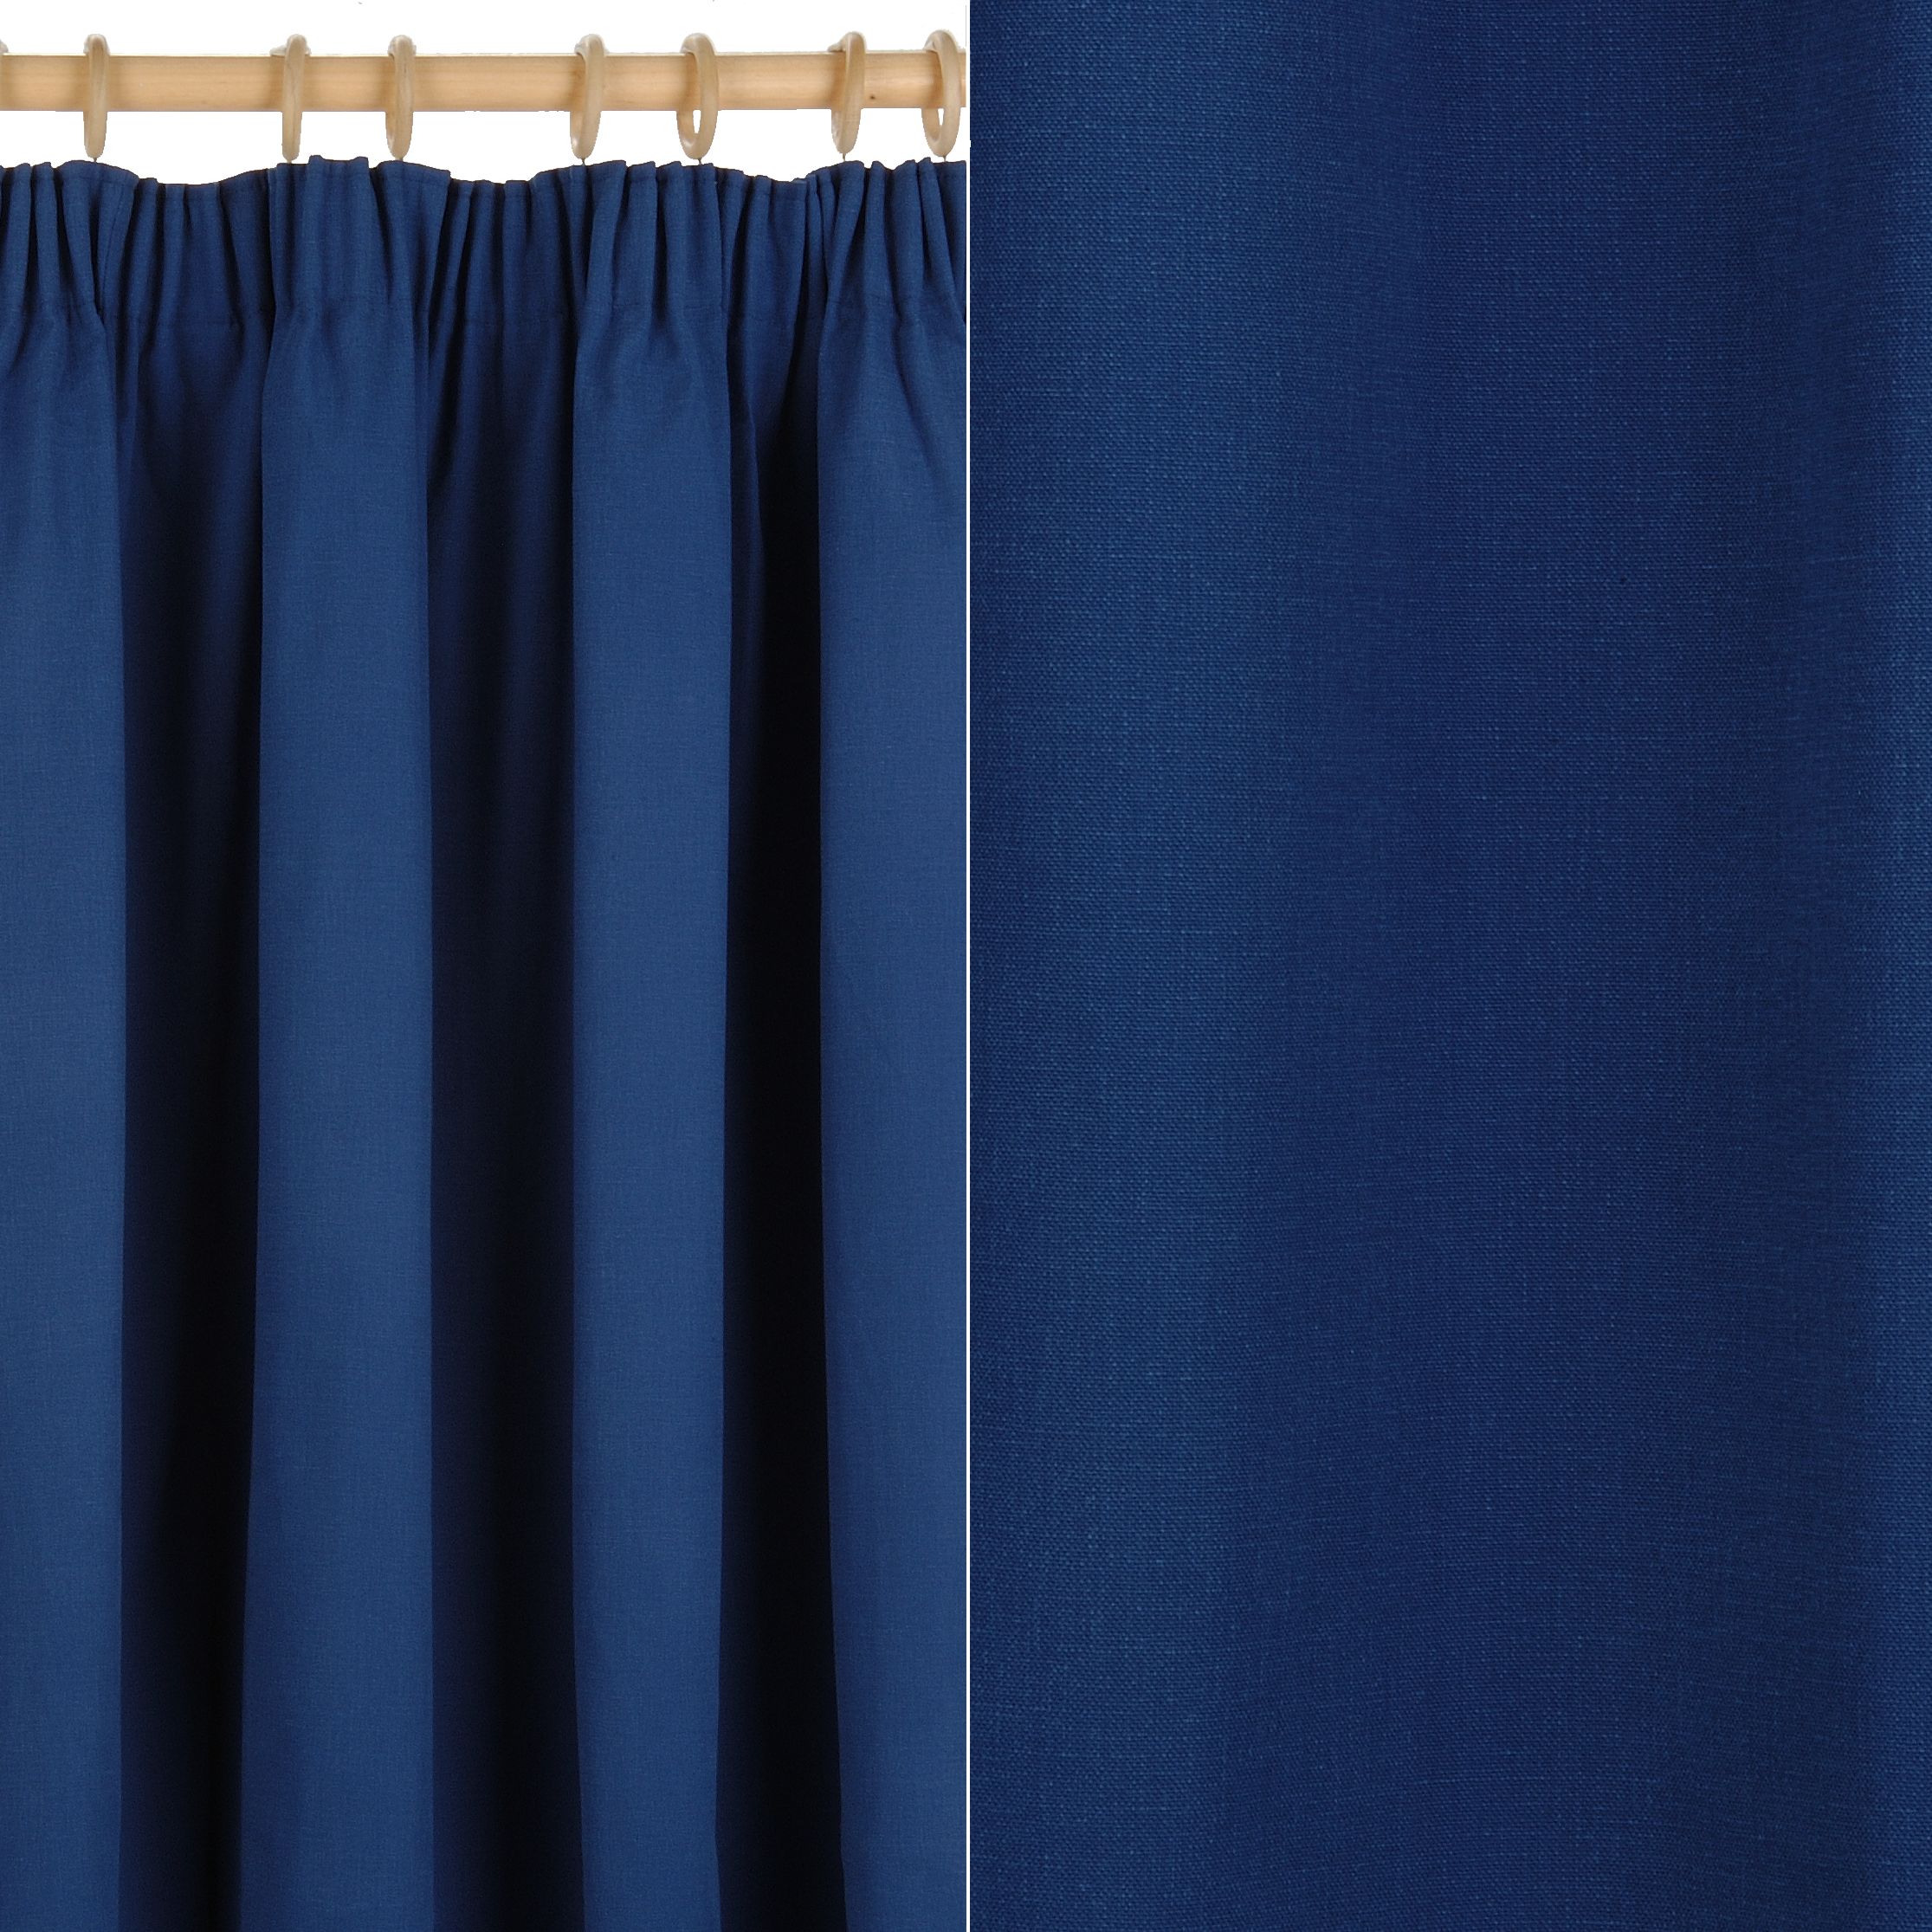 Inverness Pencil Pleat Curtains, Blue, W196 x